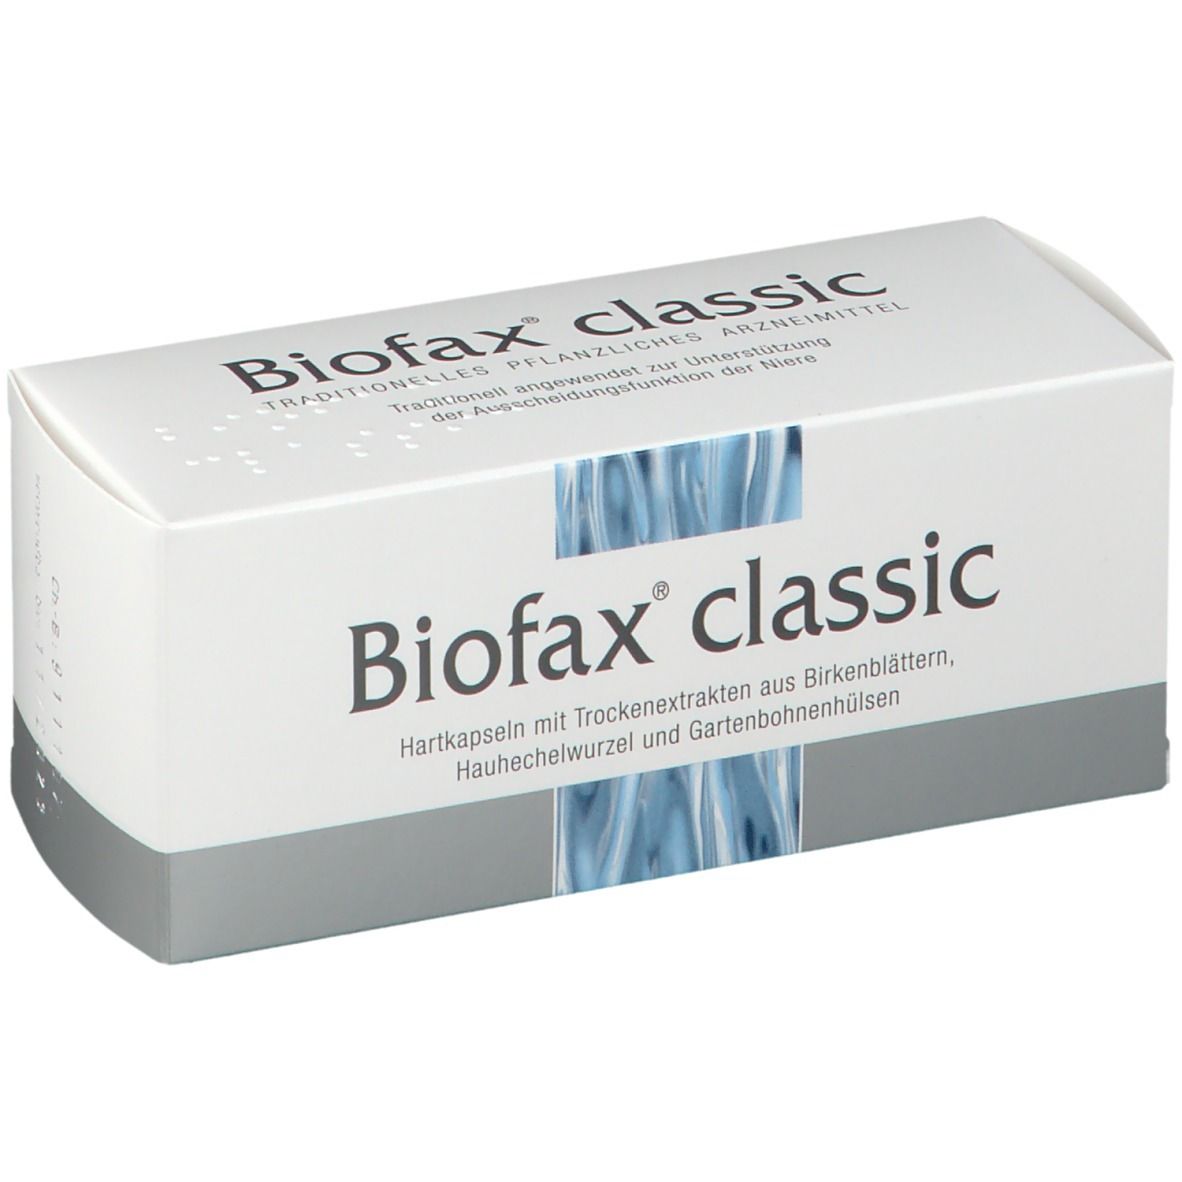 Biofax® classic